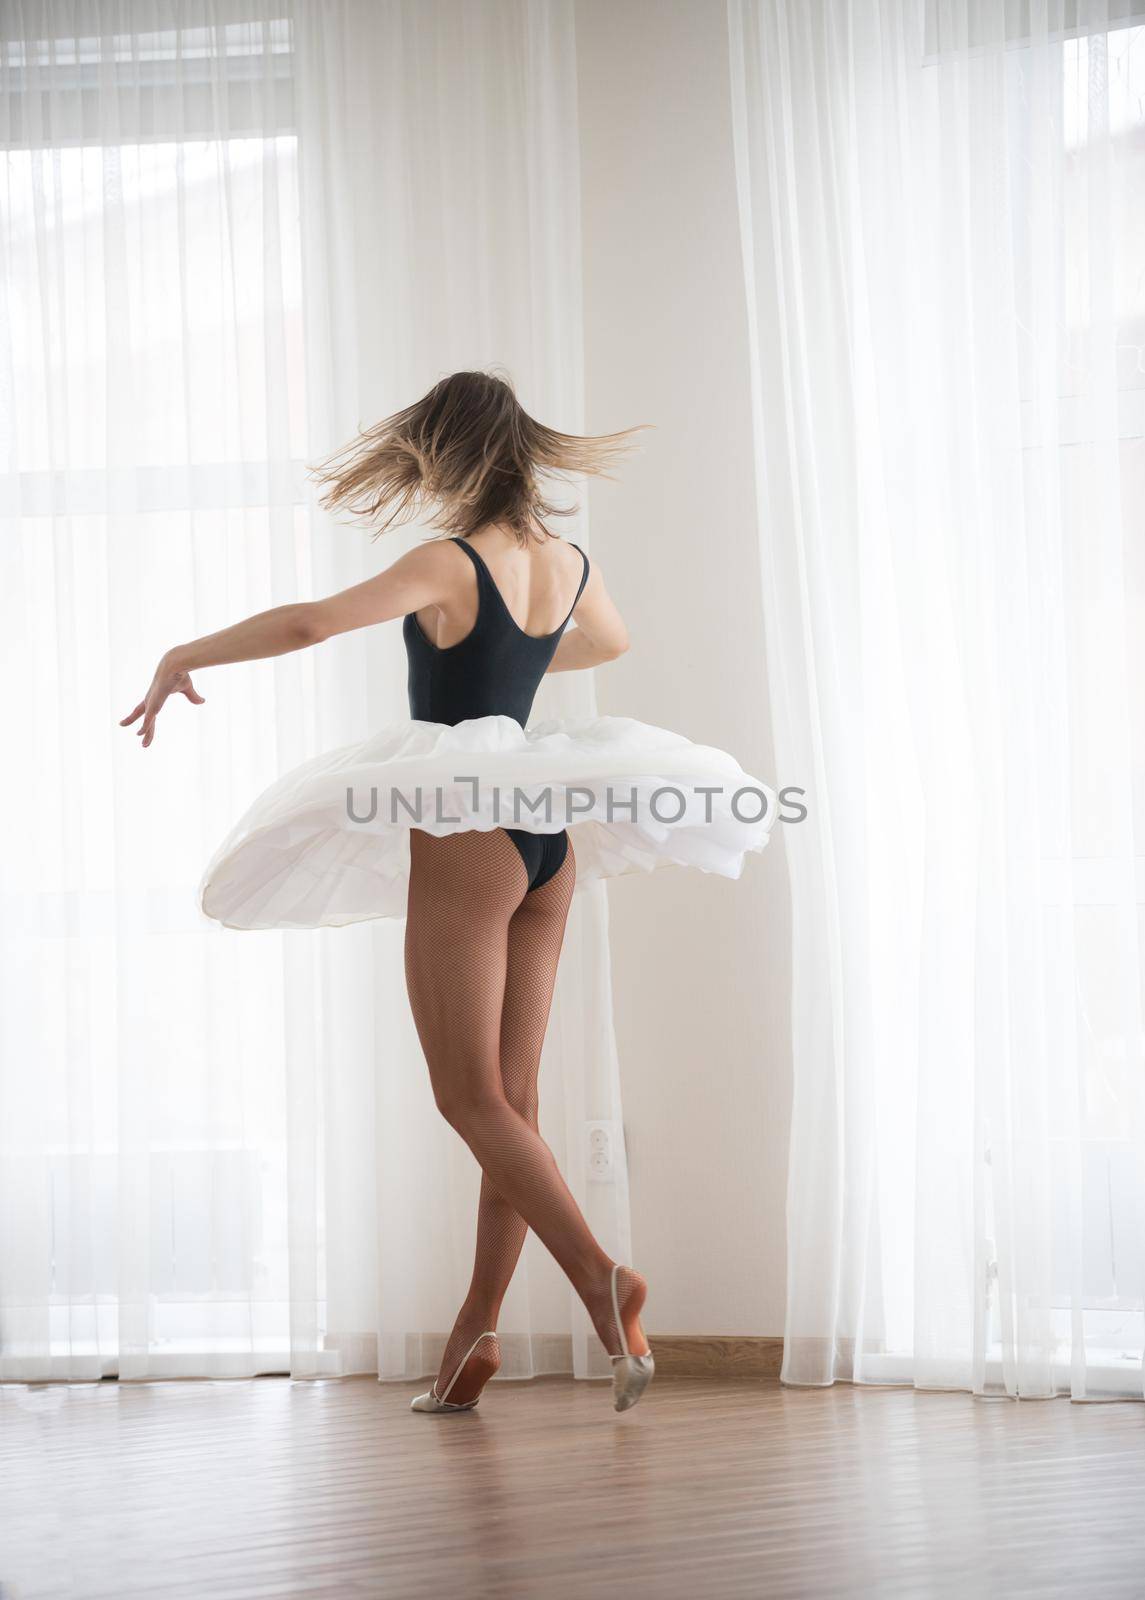 Ballerina makes a turn, in the dance studio by Studia72